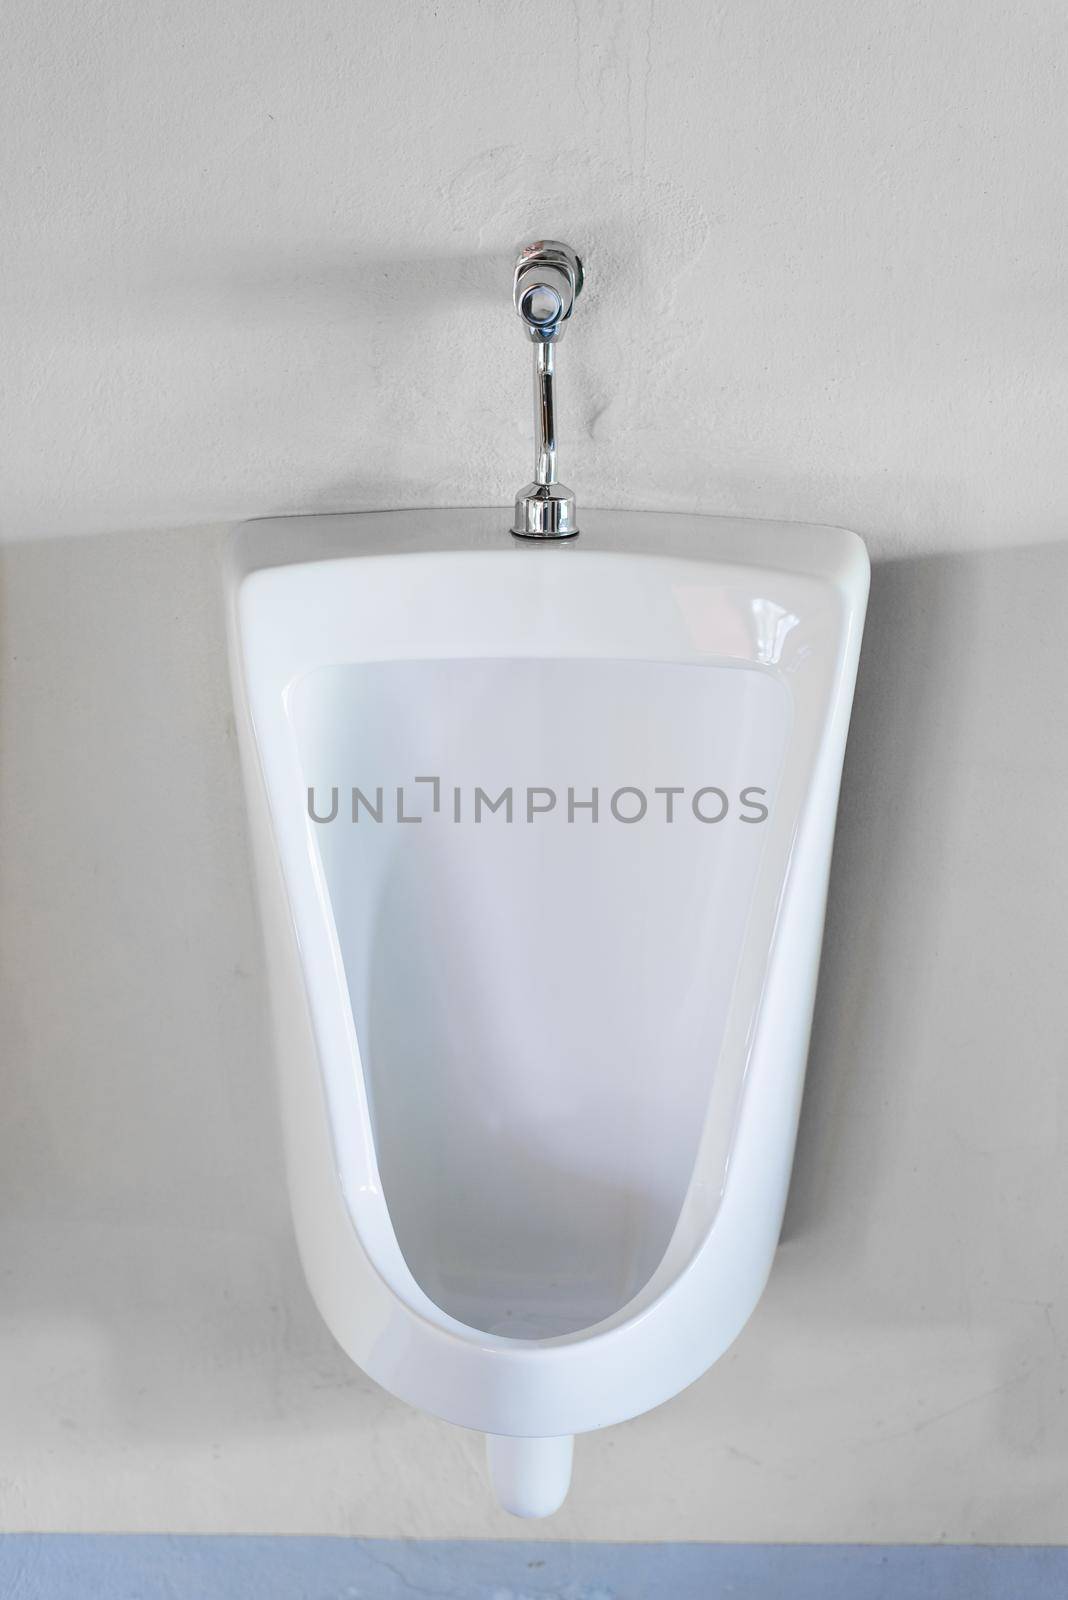 White Urinals in the public men's toilet